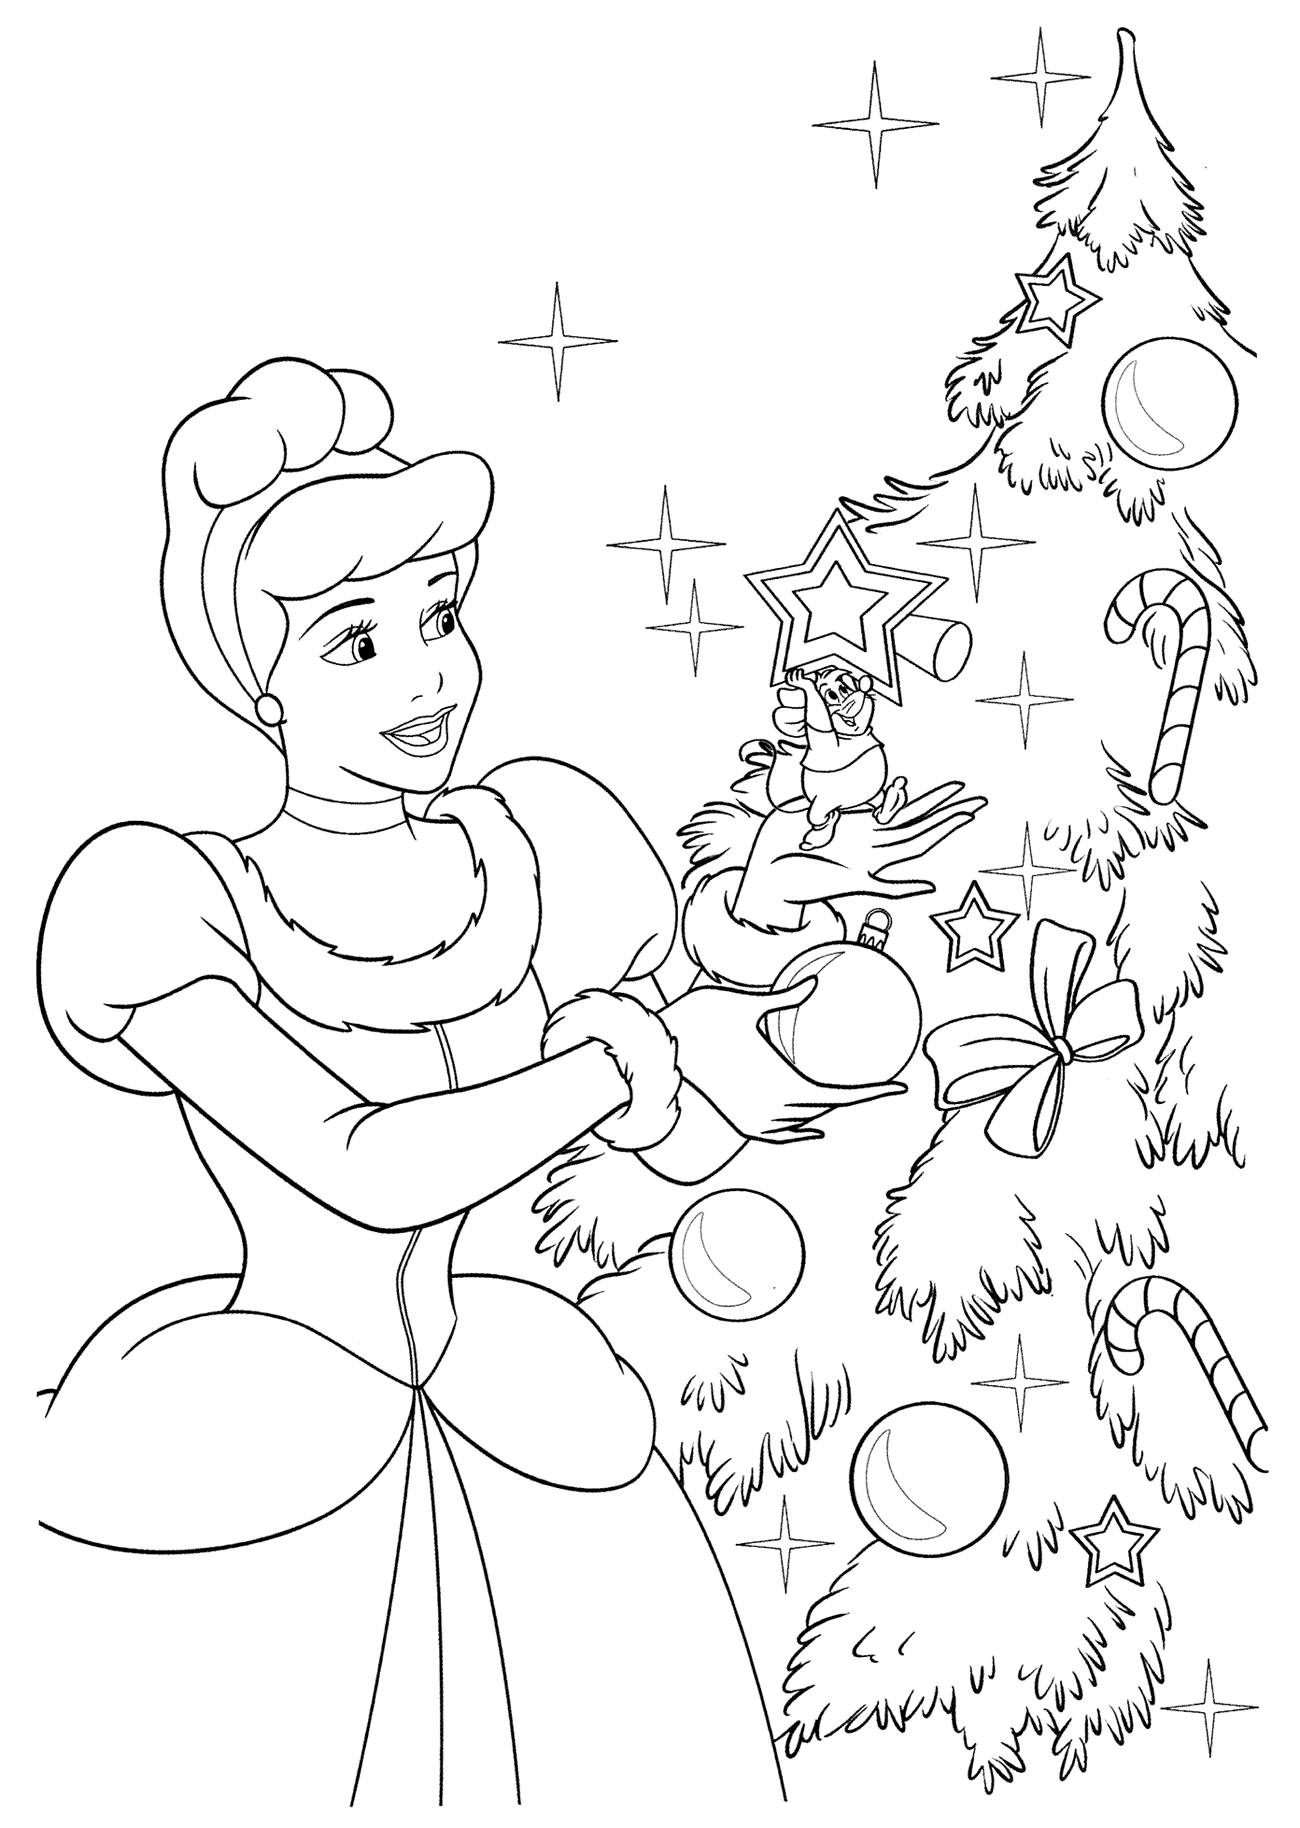 New Year's cartoon. Cinderella